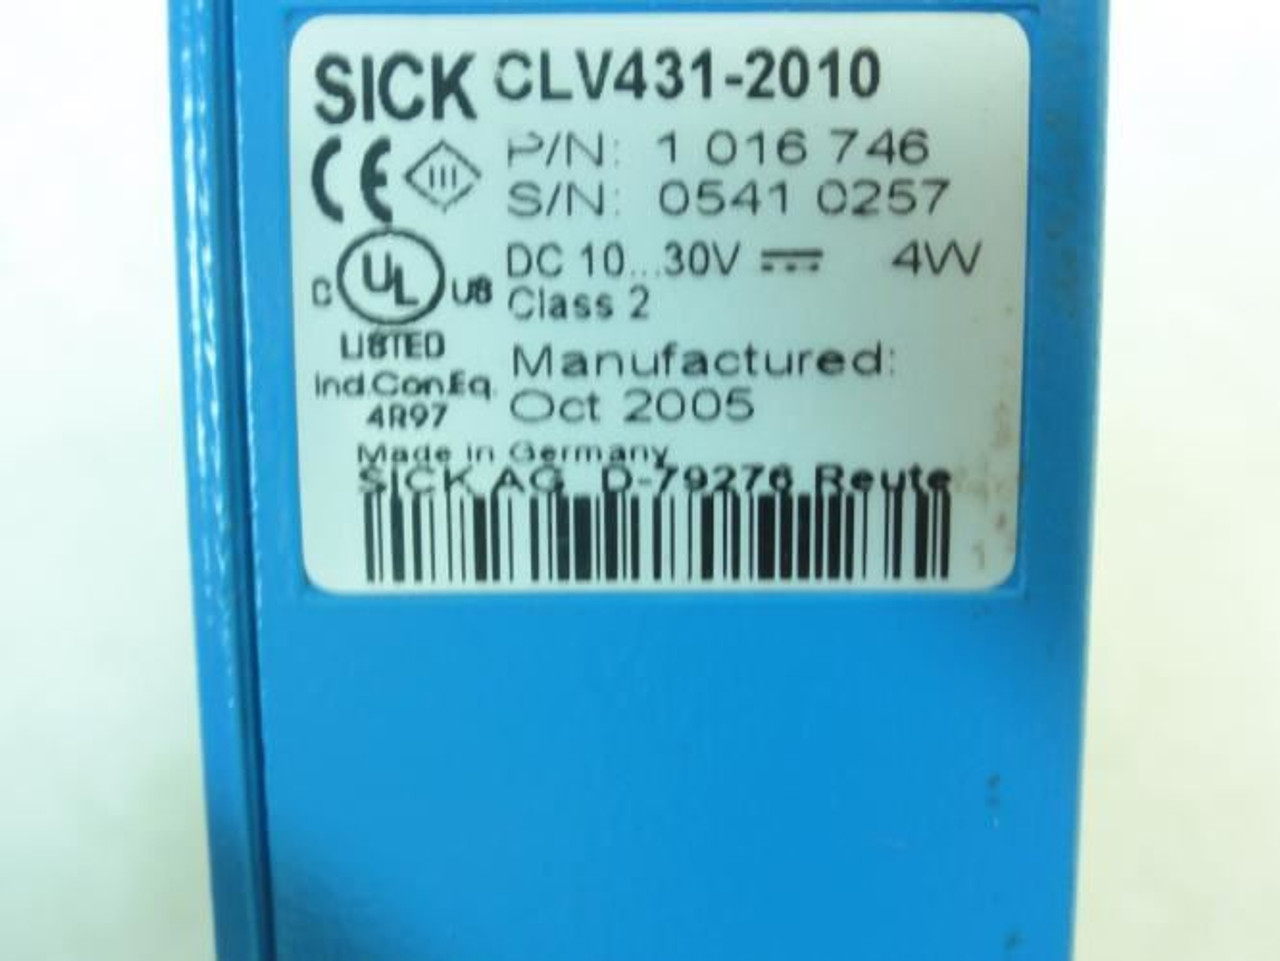 Sick CLV431-2010; Bar Code Scanner; 10167416